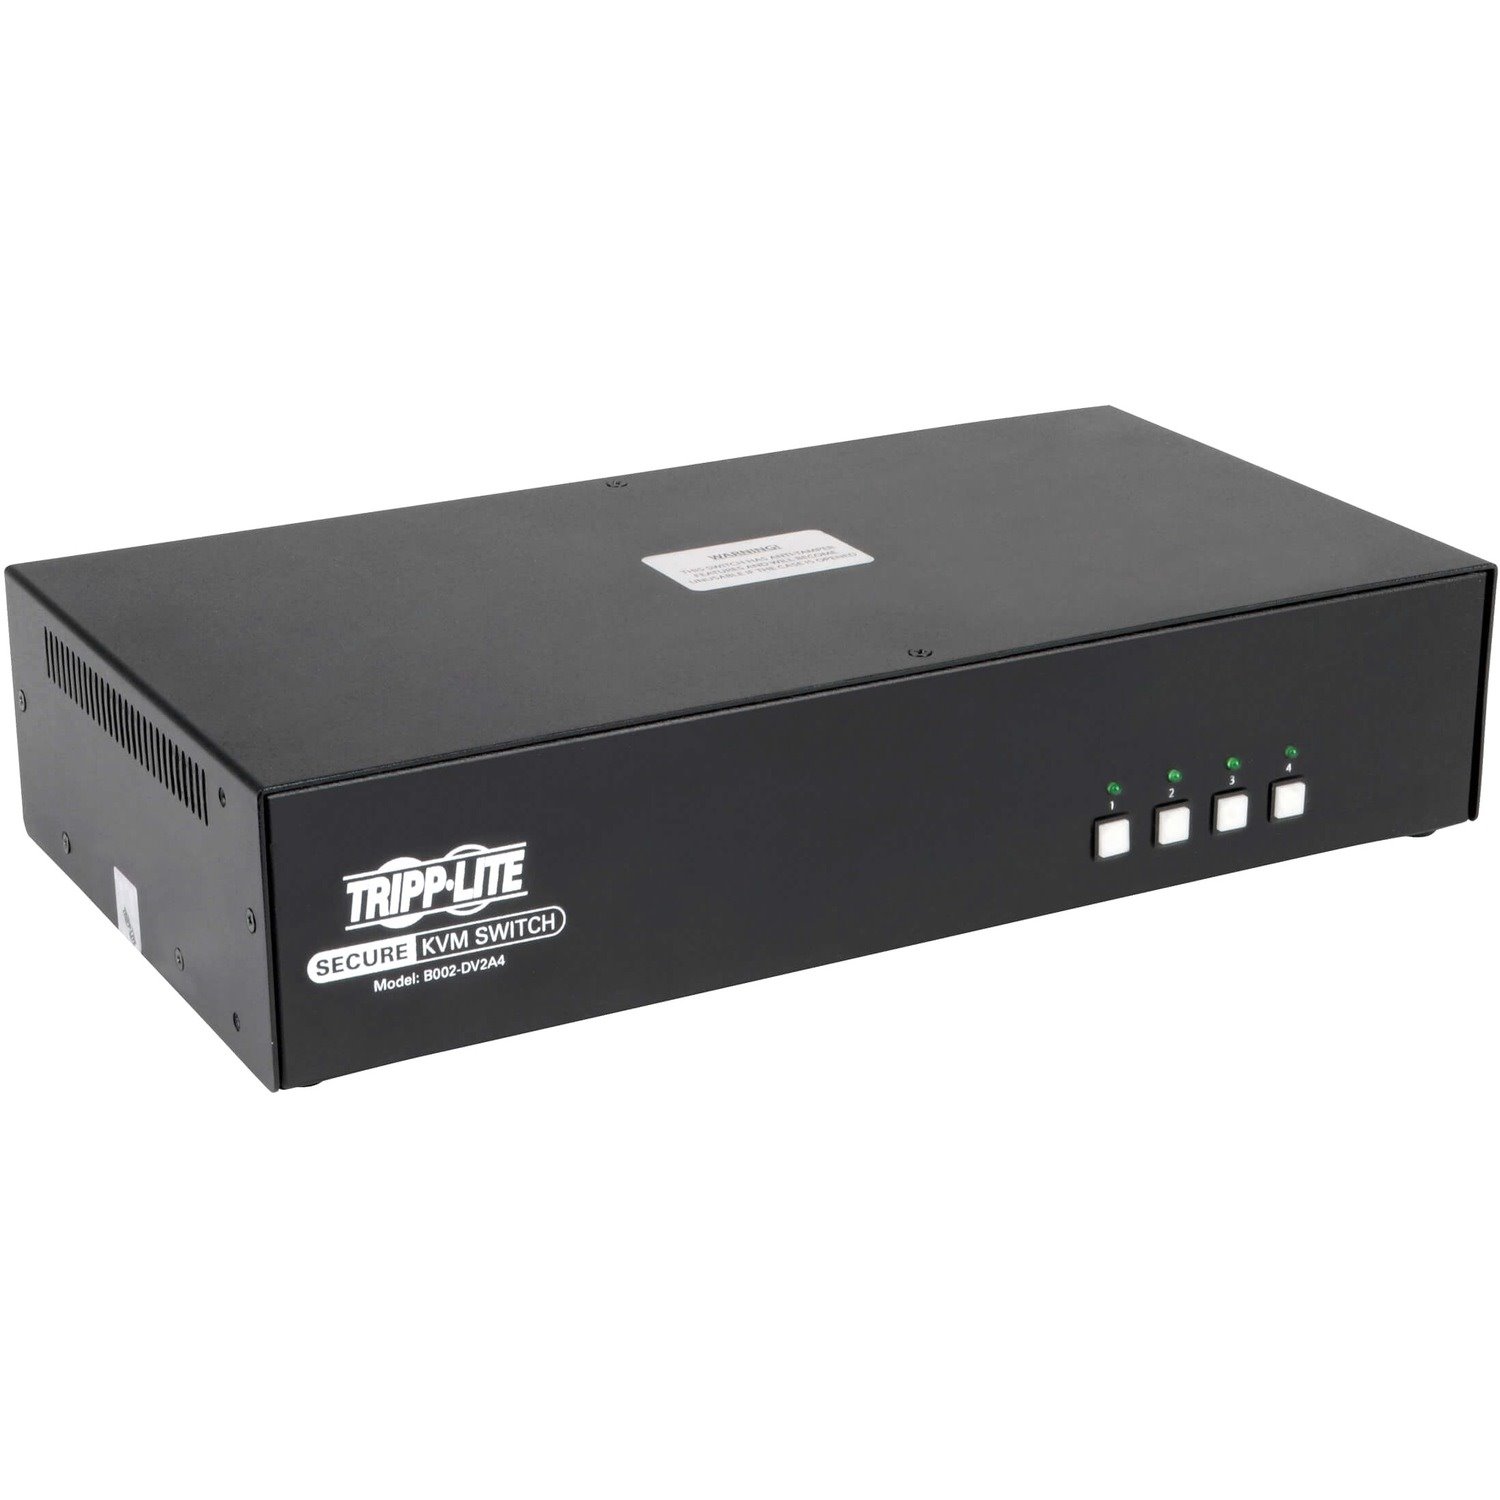 Tripp Lite by Eaton Secure KVM Switch, 4-Port, Dual Monitor, DVI to DVI, NIAP PP3.0 Certified, Audio